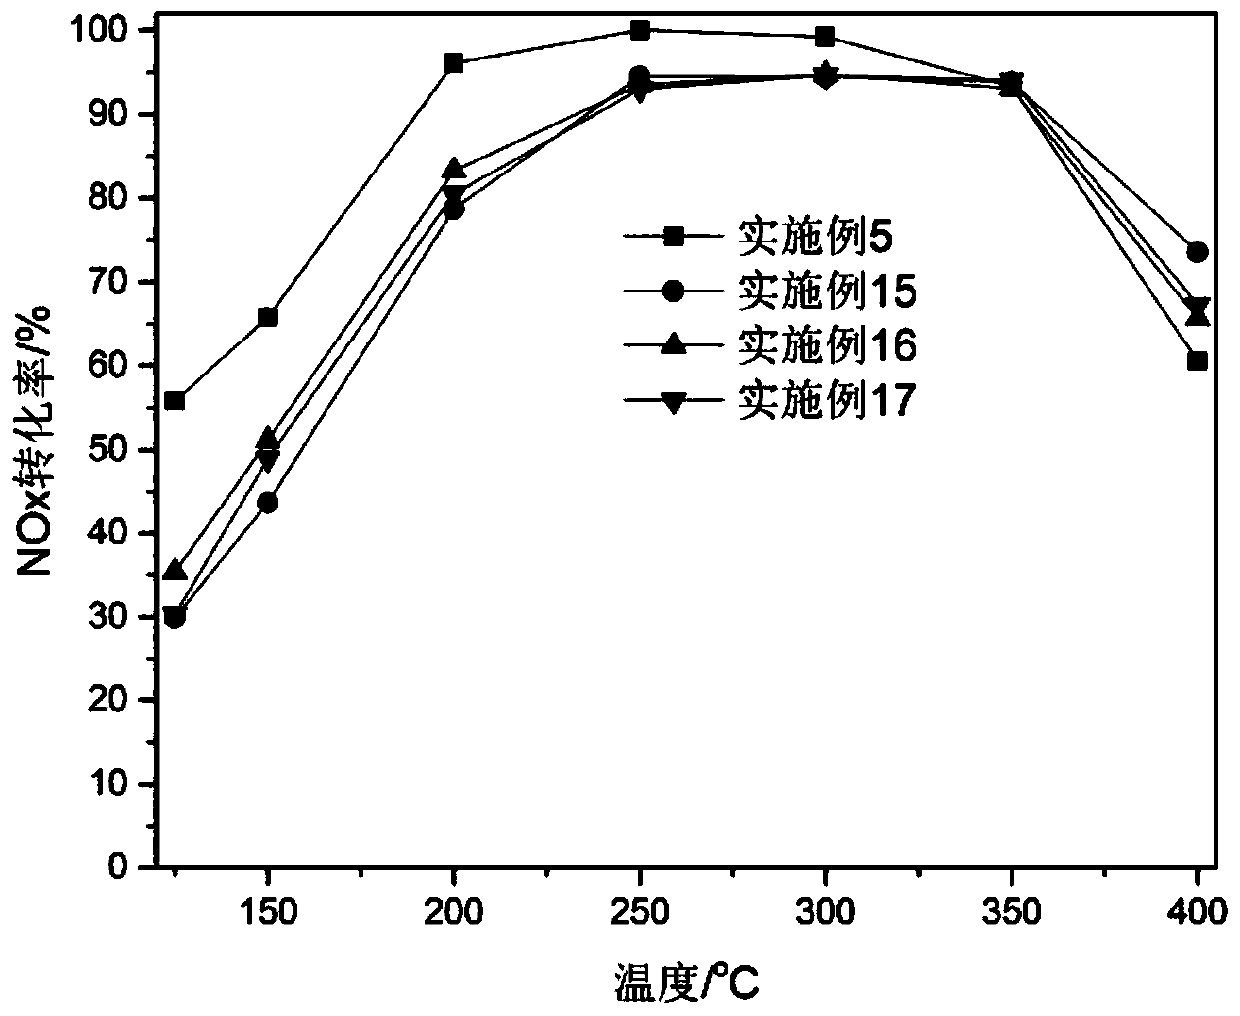 Cu-SAPO-34 molecular sieve, preparation method thereof and application of Cu-SAPO-34 molecular sieve in selective catalytic reduction denitration